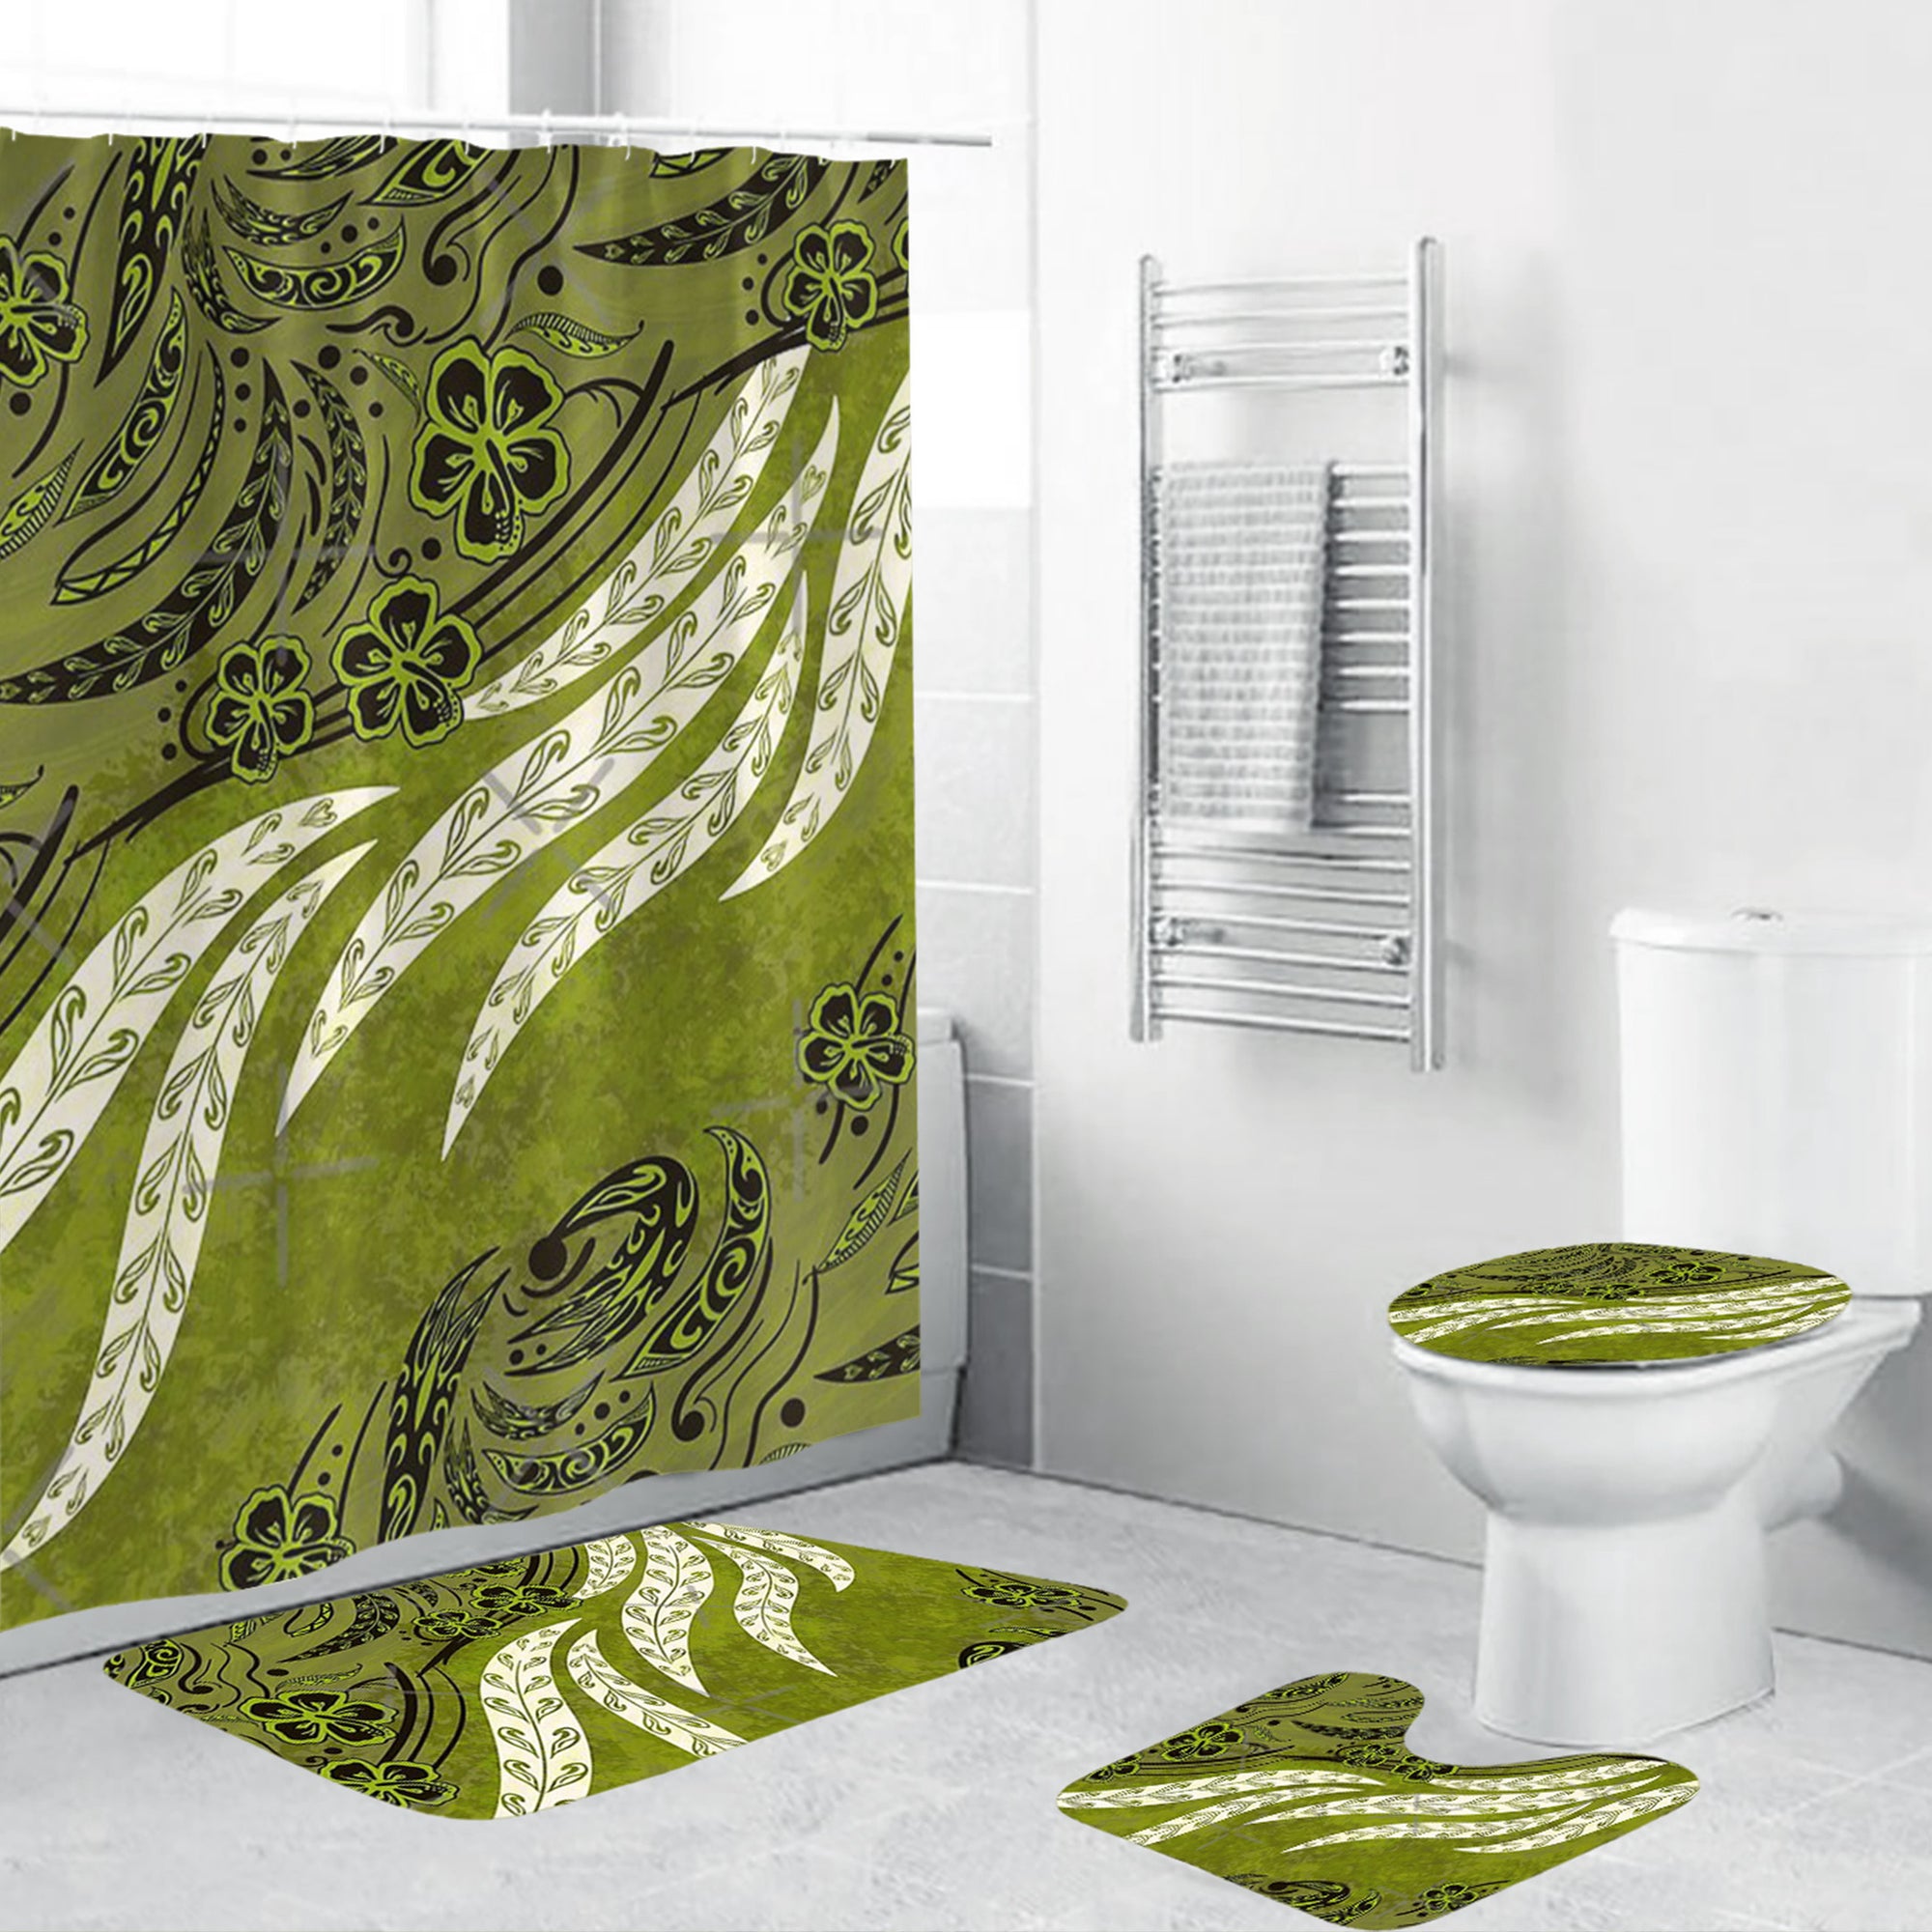 Polynesian Home Set - Tribal Olive Green Floral Splash Bathroom Set LT10 Green - Polynesian Pride